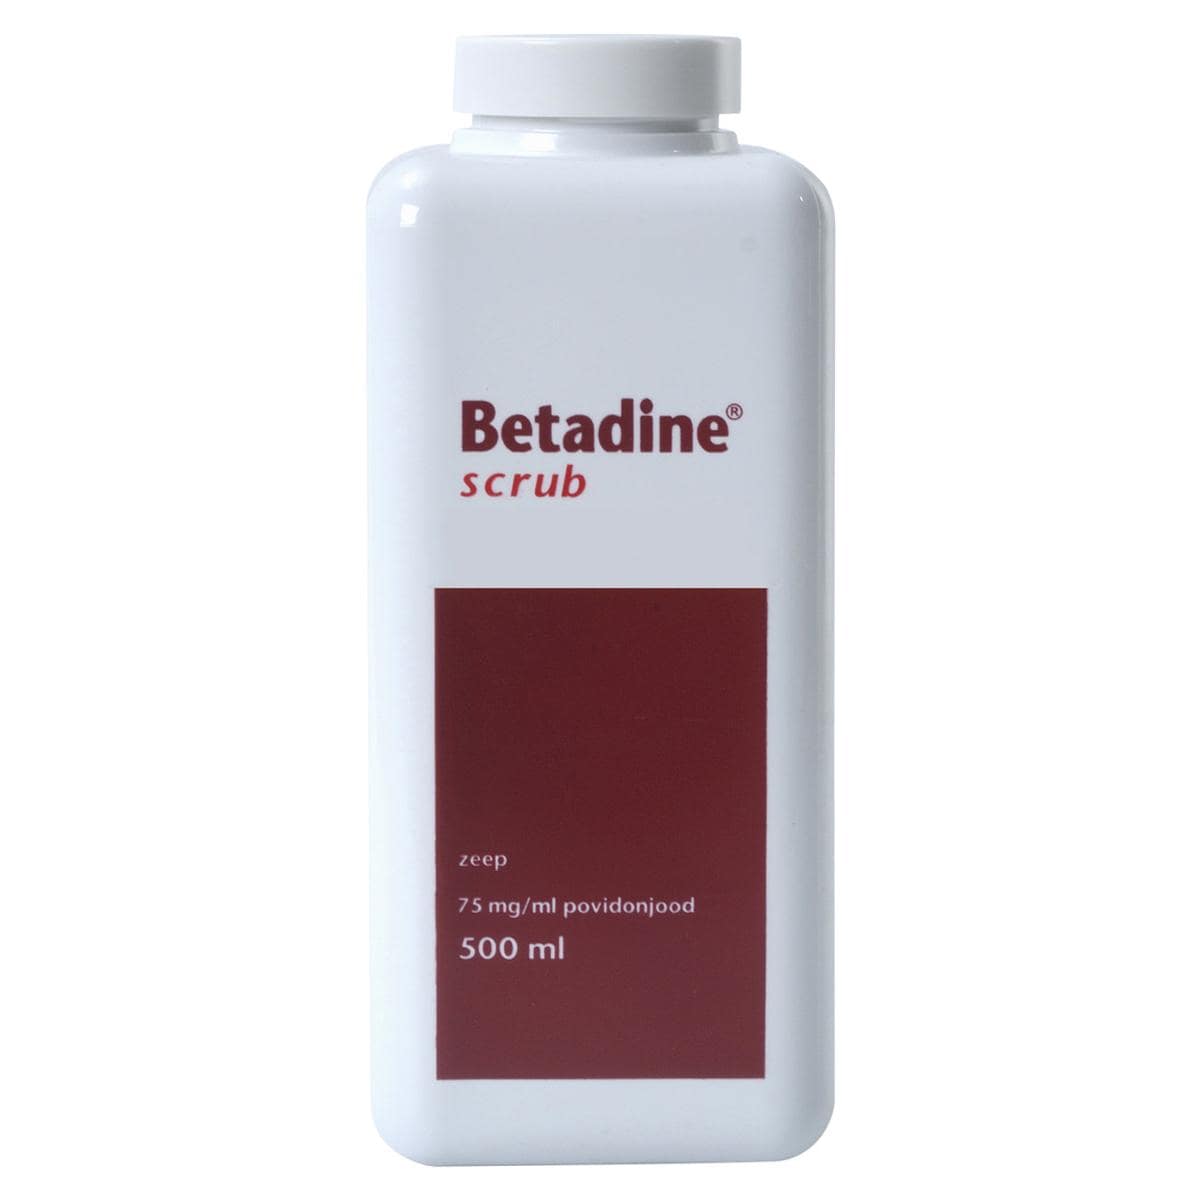 Betadine scrub - 500 ml